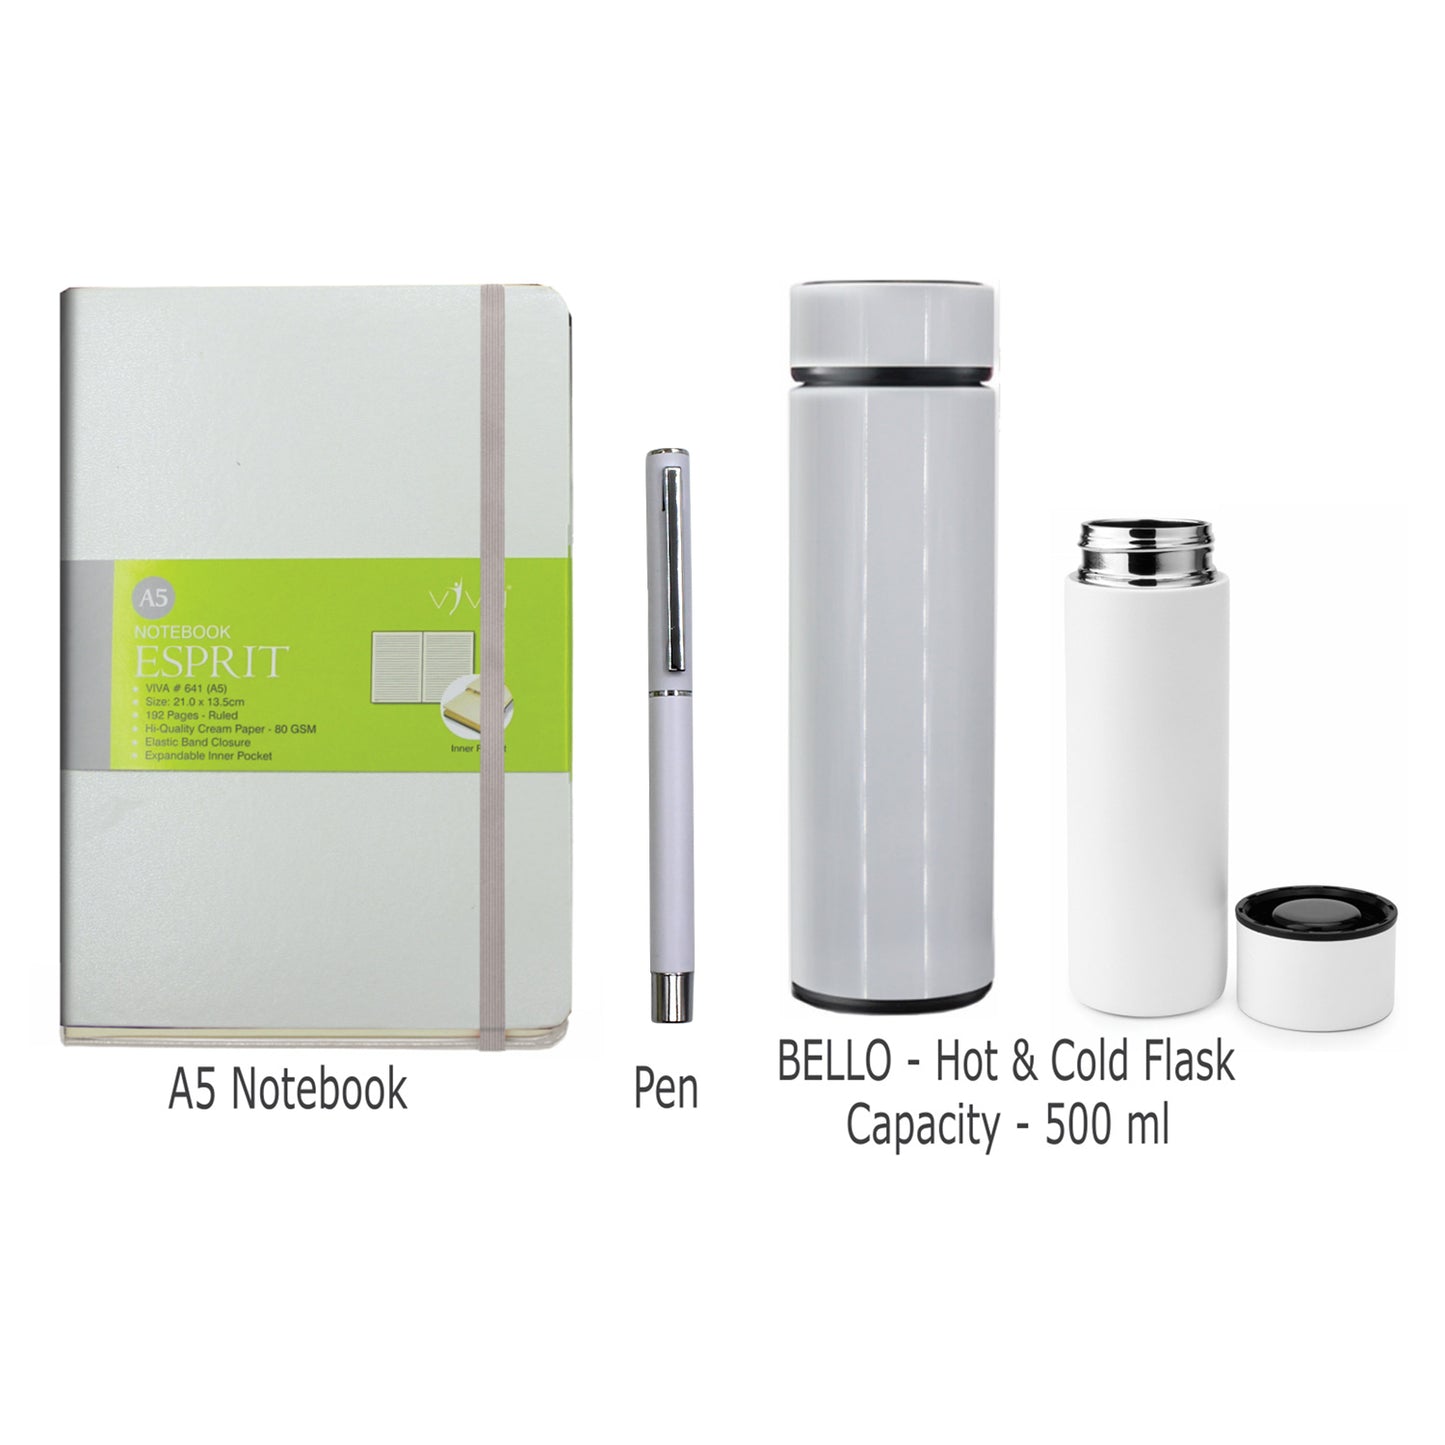 ESPRIT-NPF 3 PCS GIFT SET (Notebook + Pen + Flask)